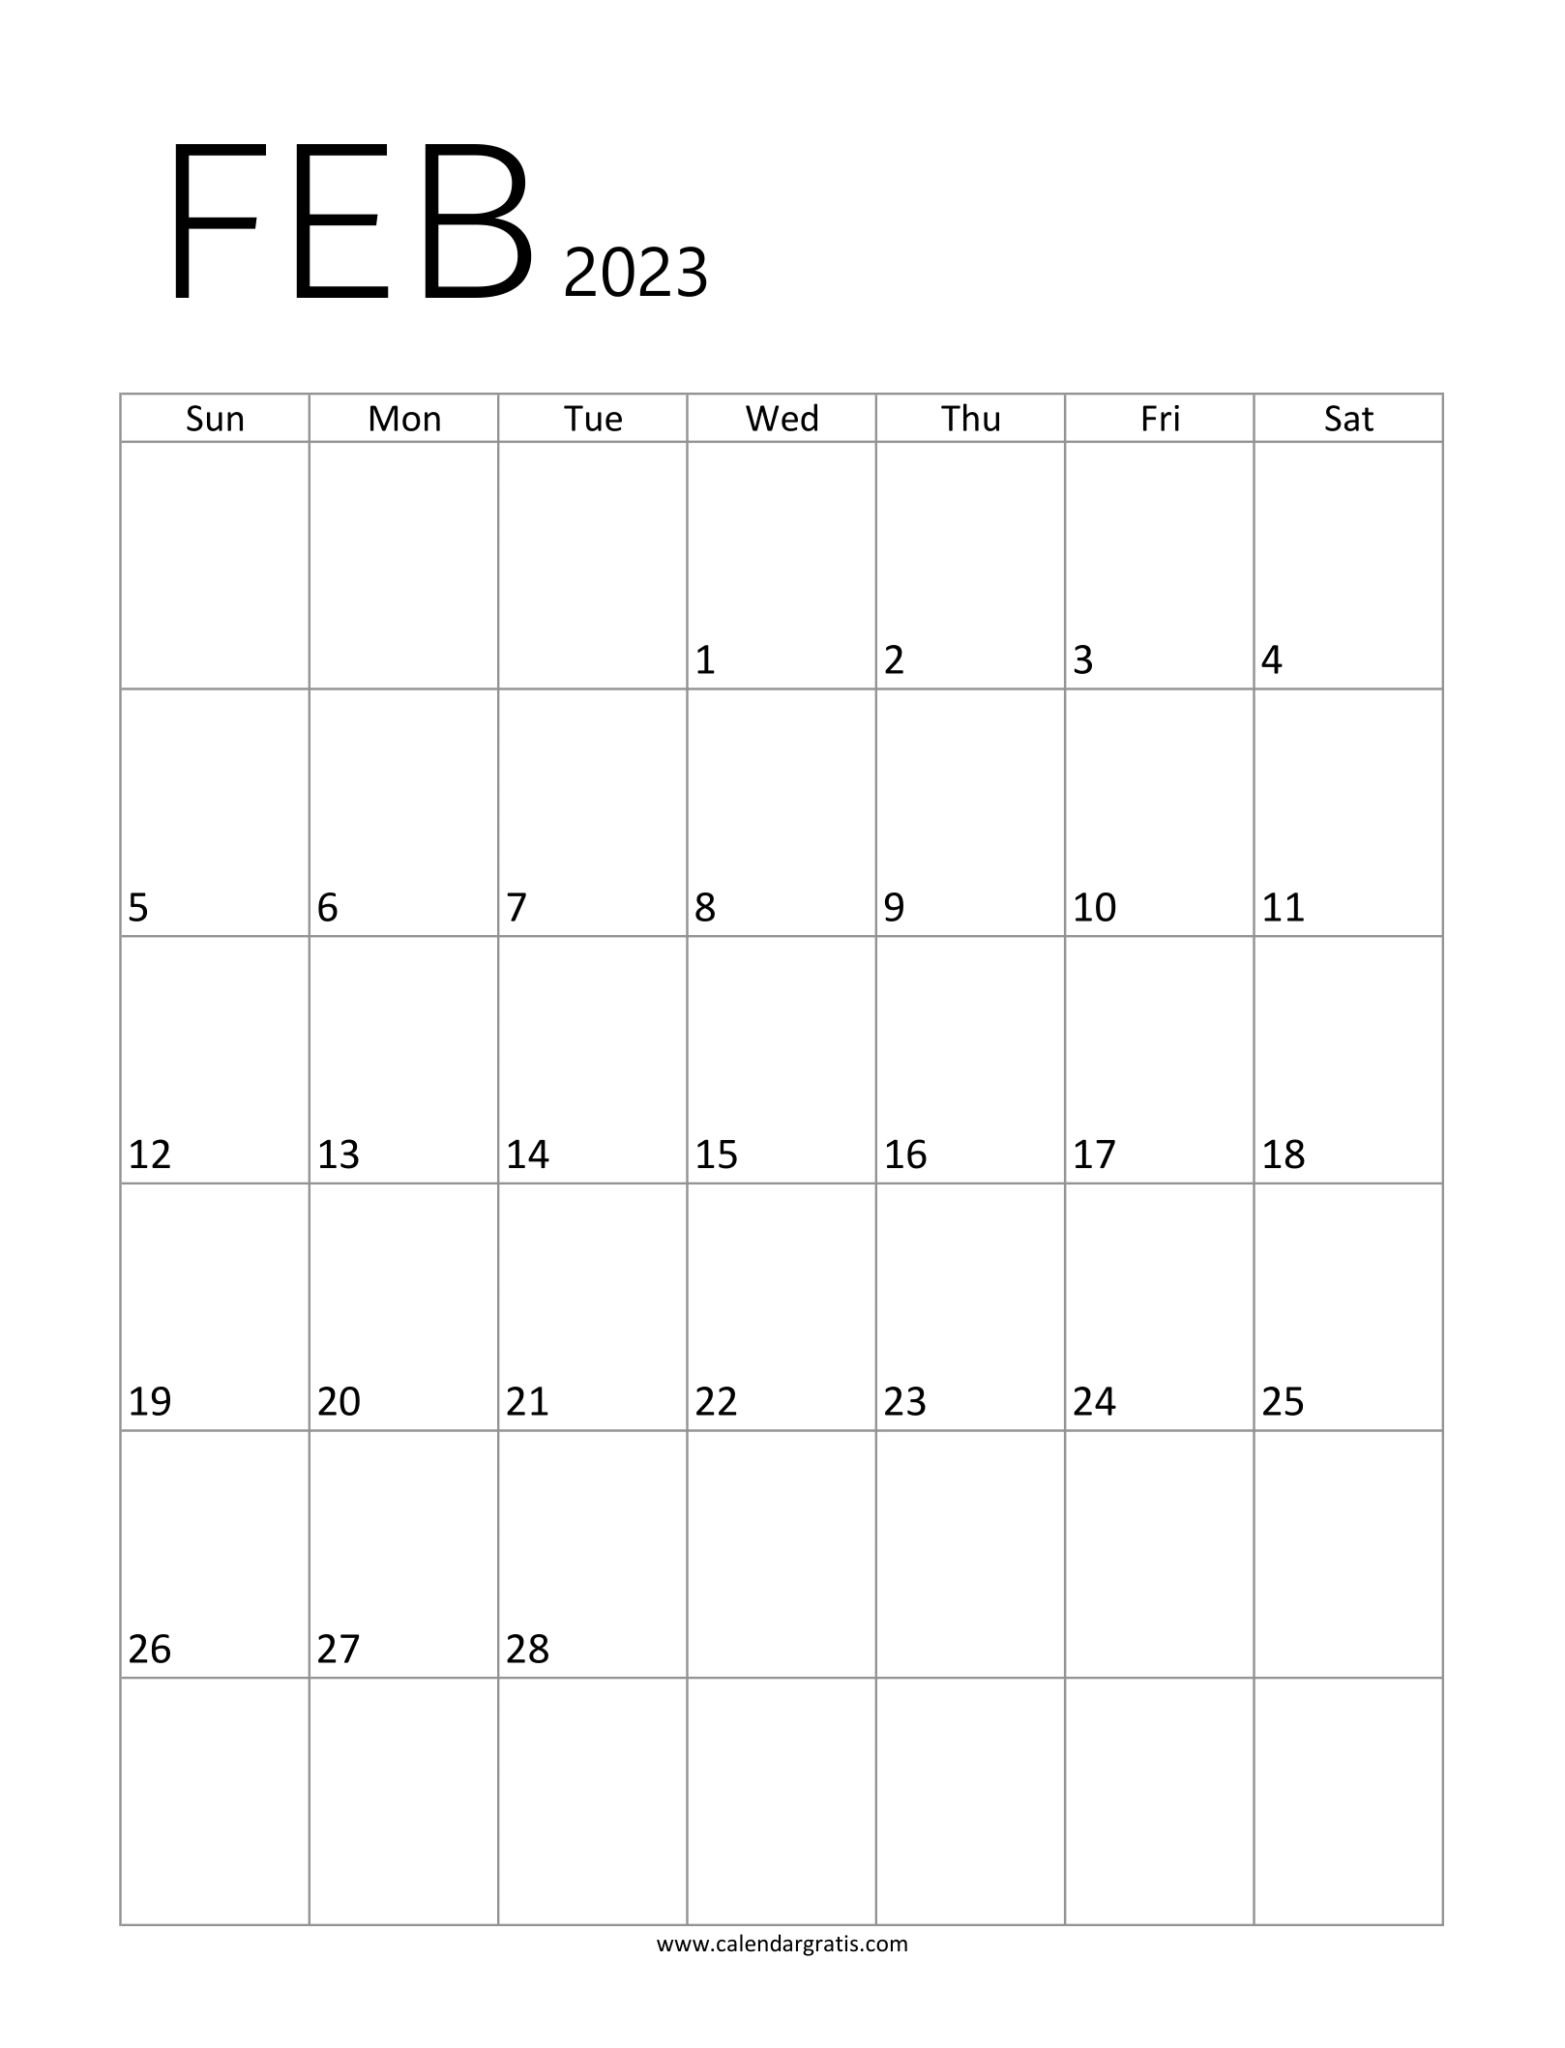 February 2023 Calendar A4 Printable Template Vertical Layout Calendar